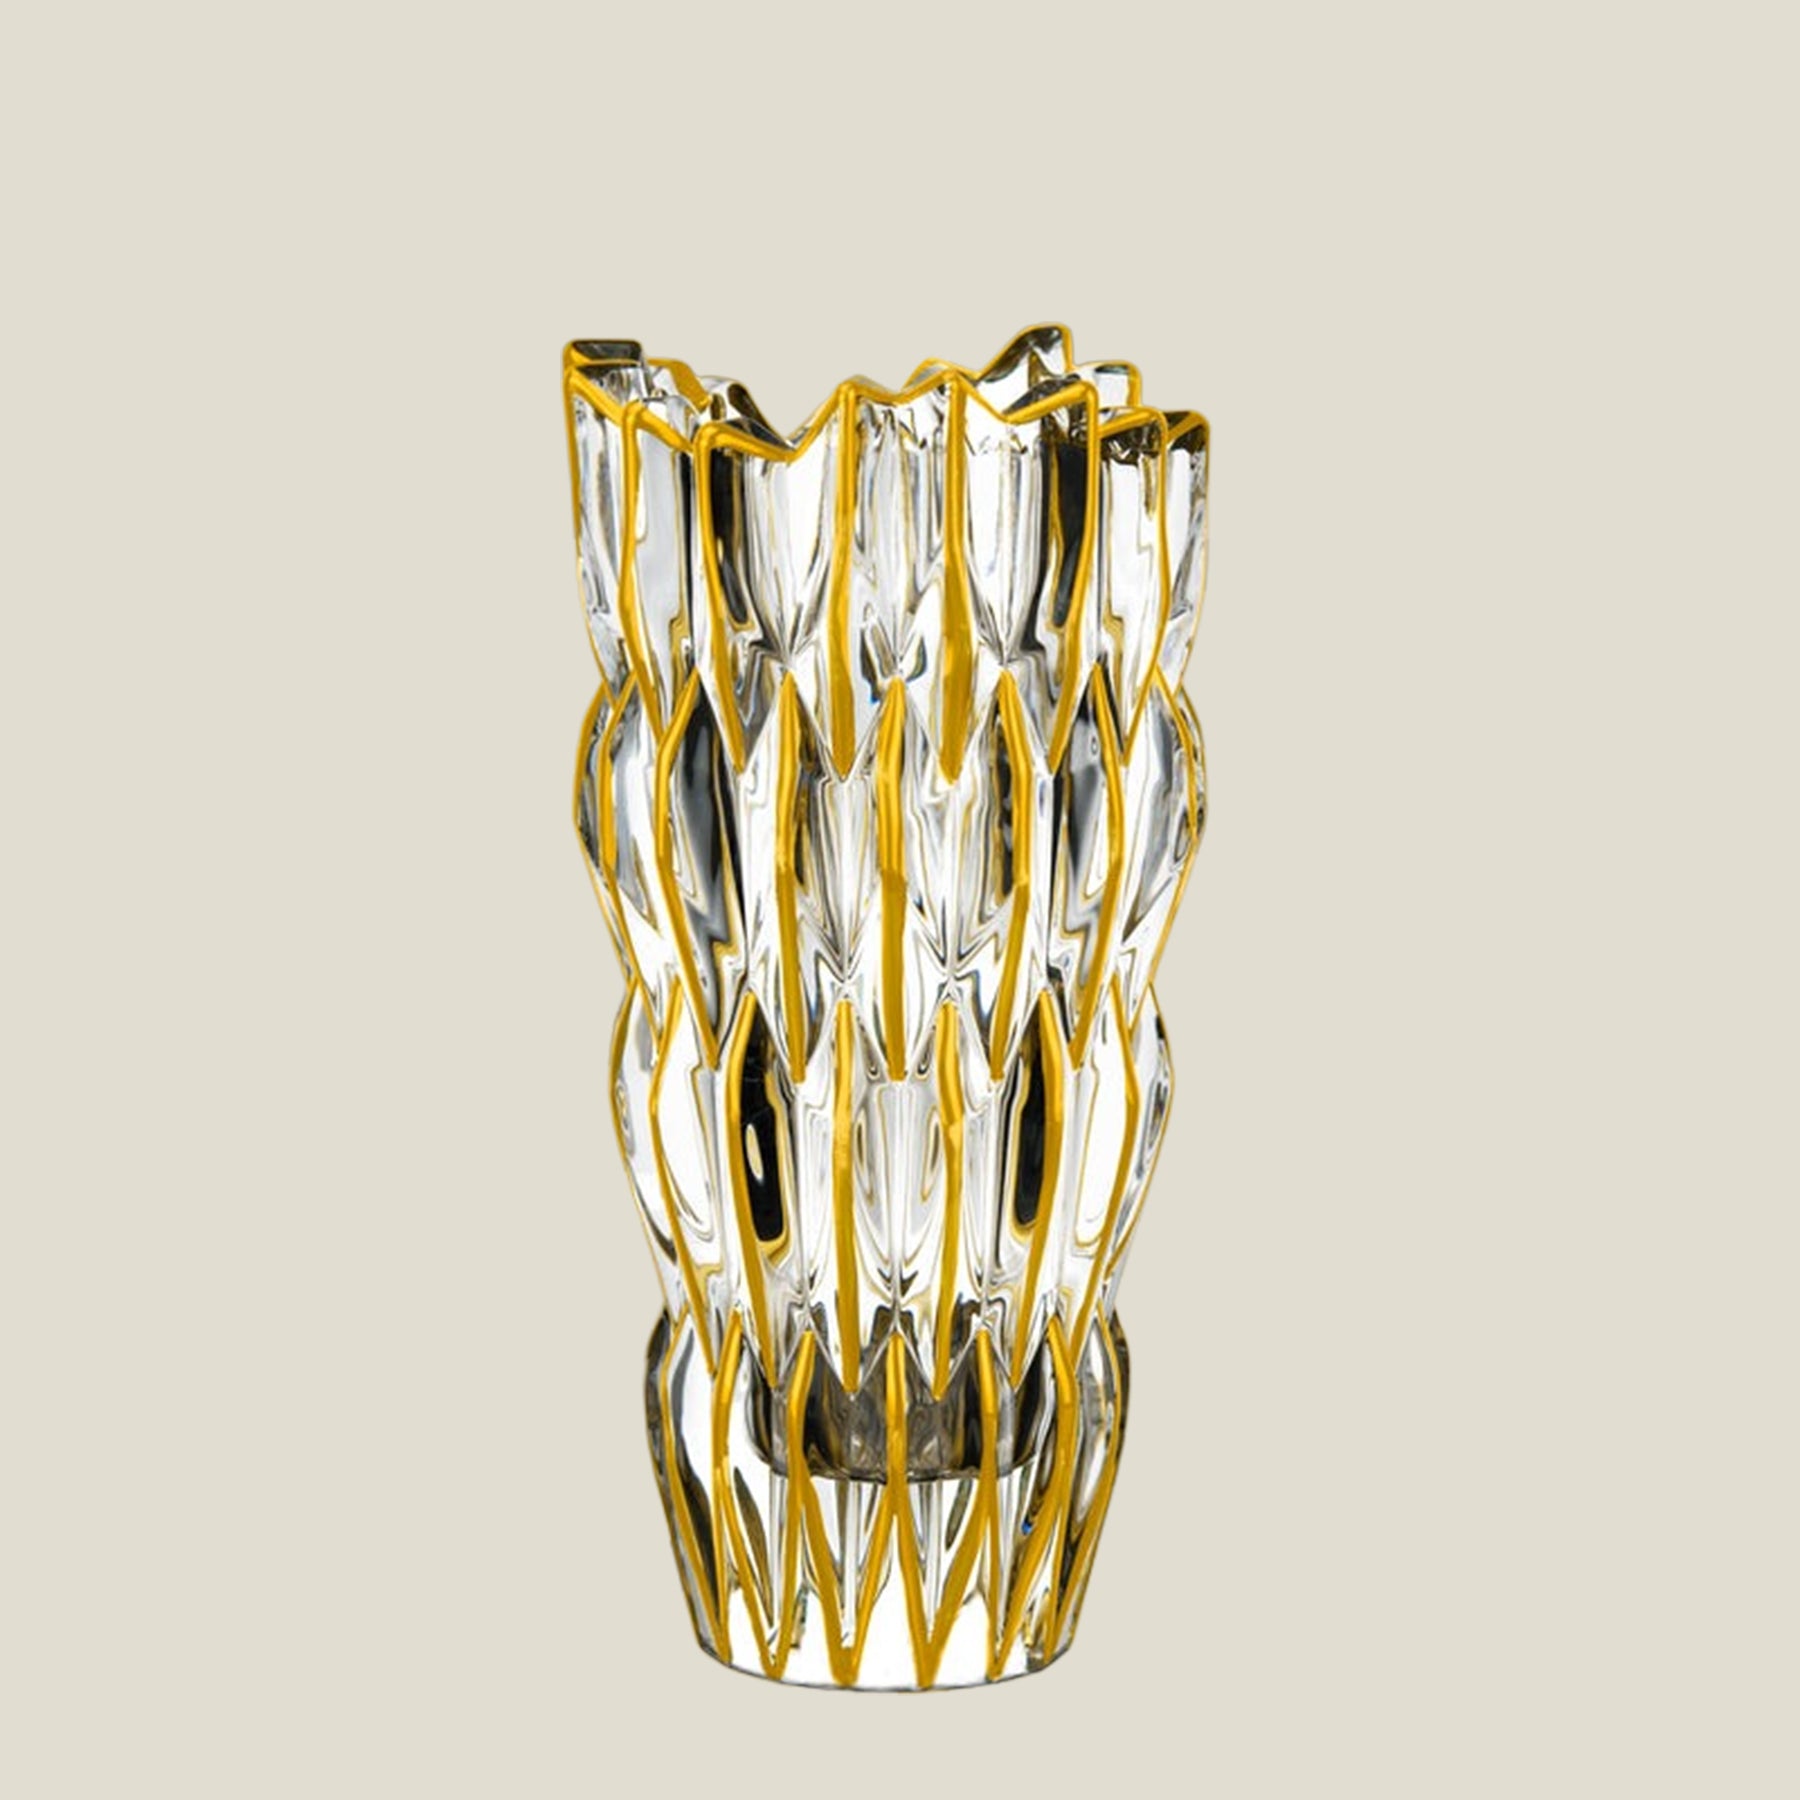 Rhombic Design Vase With Golden Lining - H-29.5 CM 71-721929